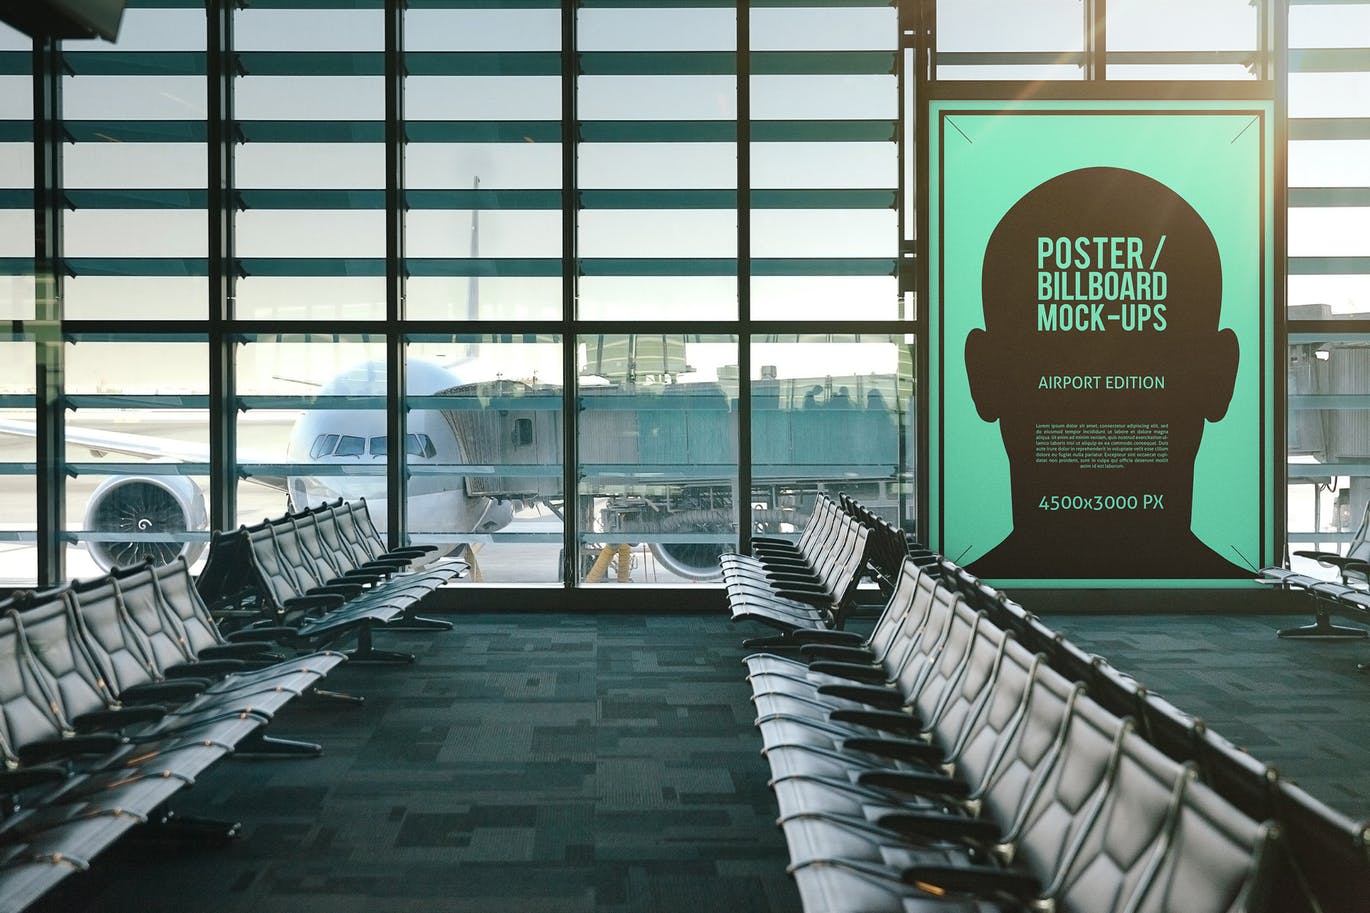 机场候机室海报/广告牌样机16设计网精选模板#1 Poster / Billboard Mock-ups – Airport Edition #1插图